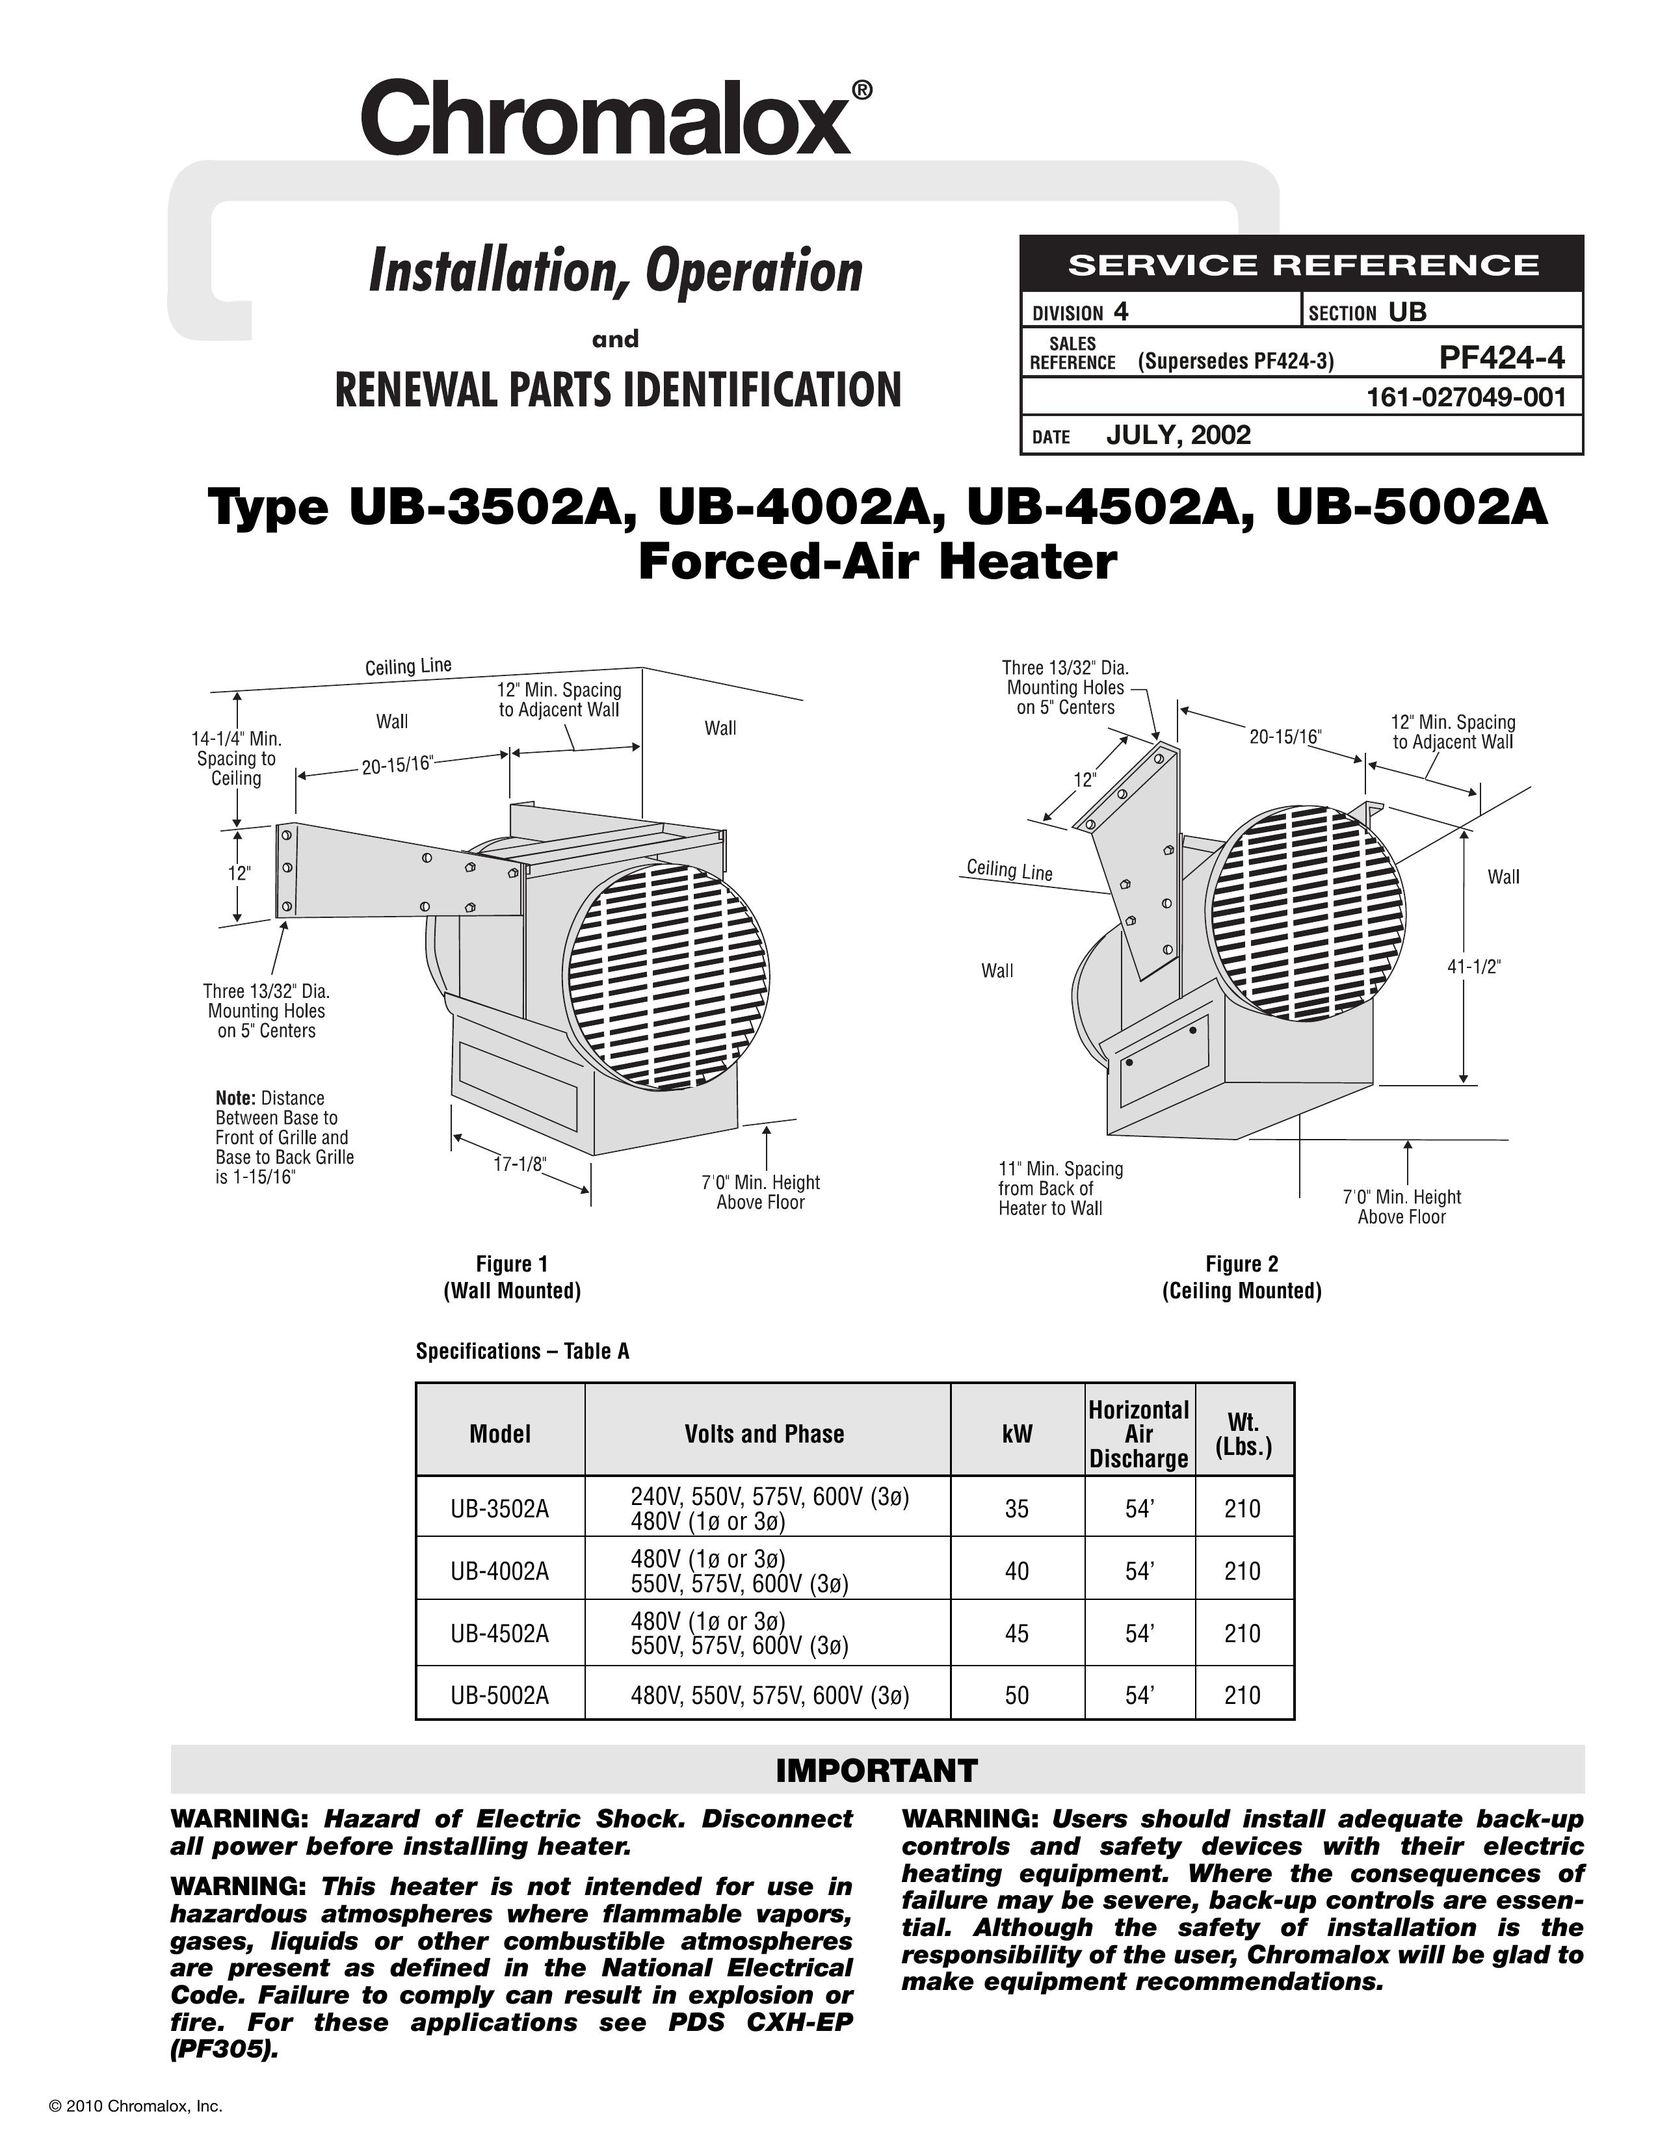 Chromalox UB-5002A Air Conditioner User Manual